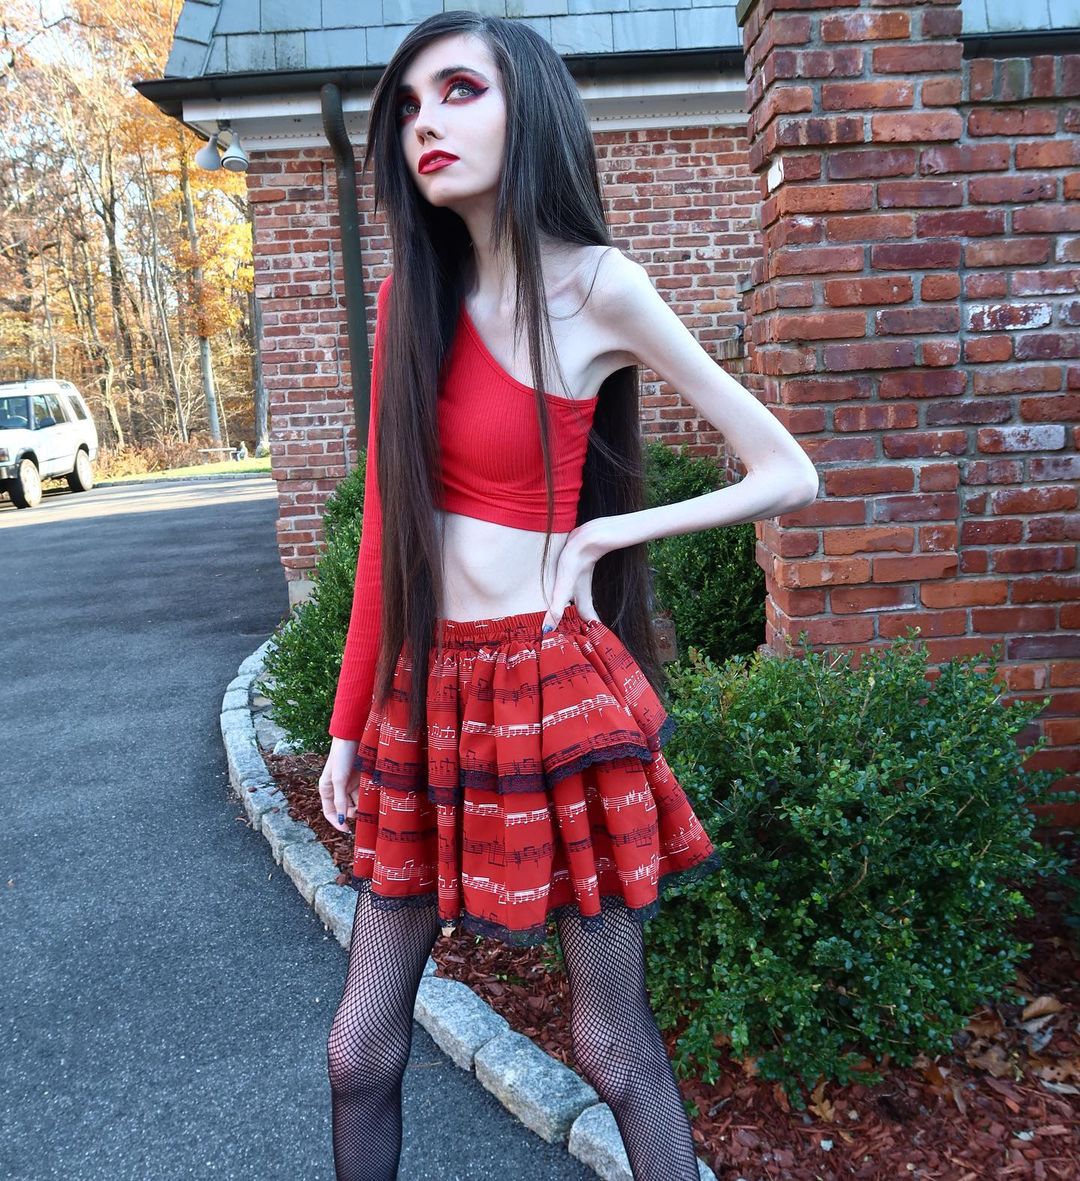 Skinny YouTuber Eugenia Cooney models for. outside of her own house. 